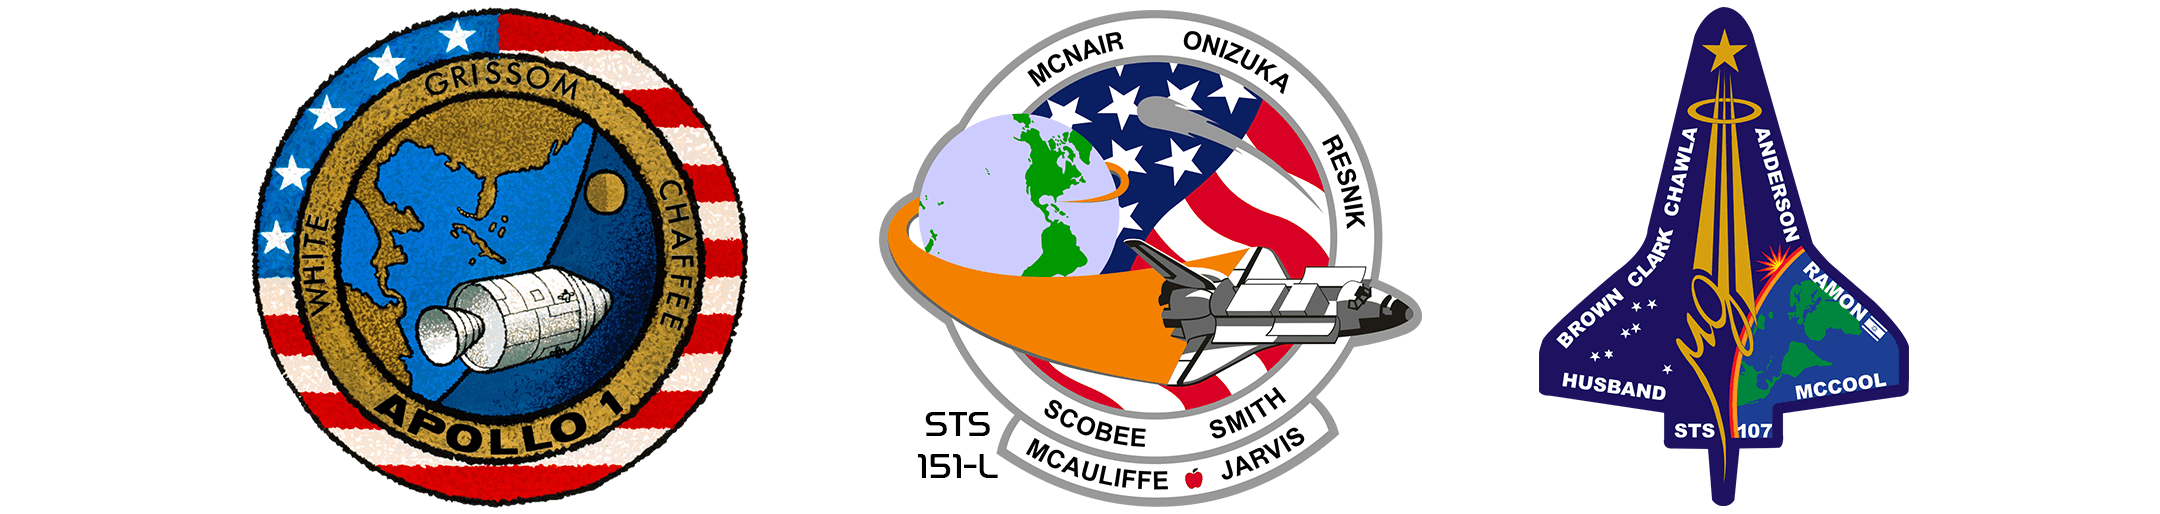 badge des missions mortelles NASA